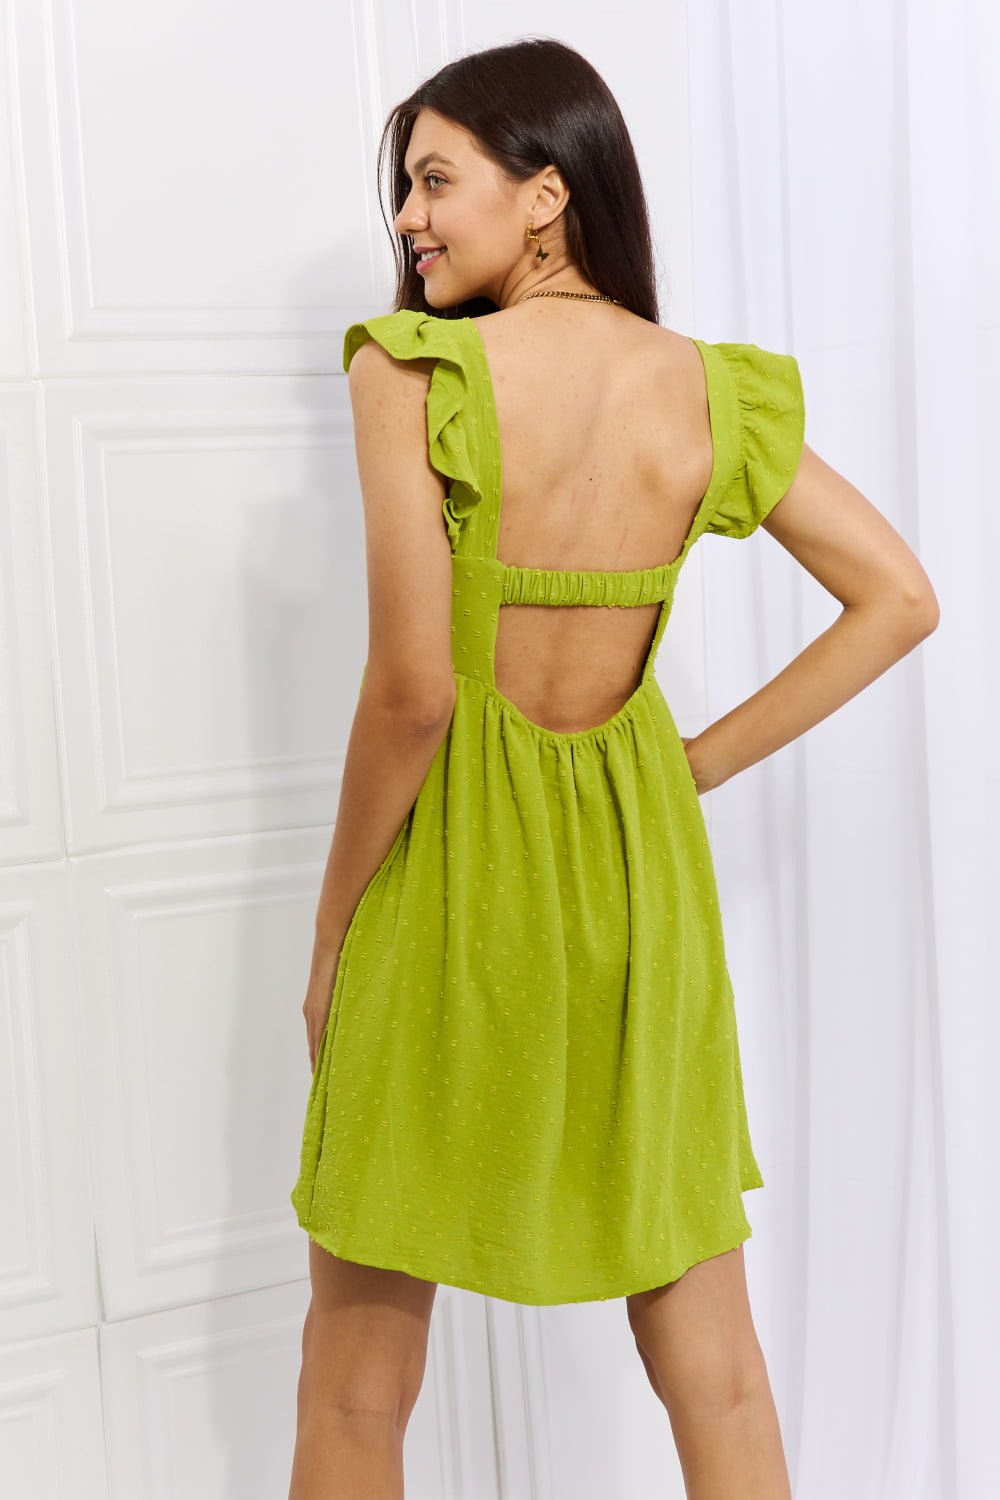 Empire Waist Ruffle Sleeve Mini Dress in LimeMini DressCulture Code